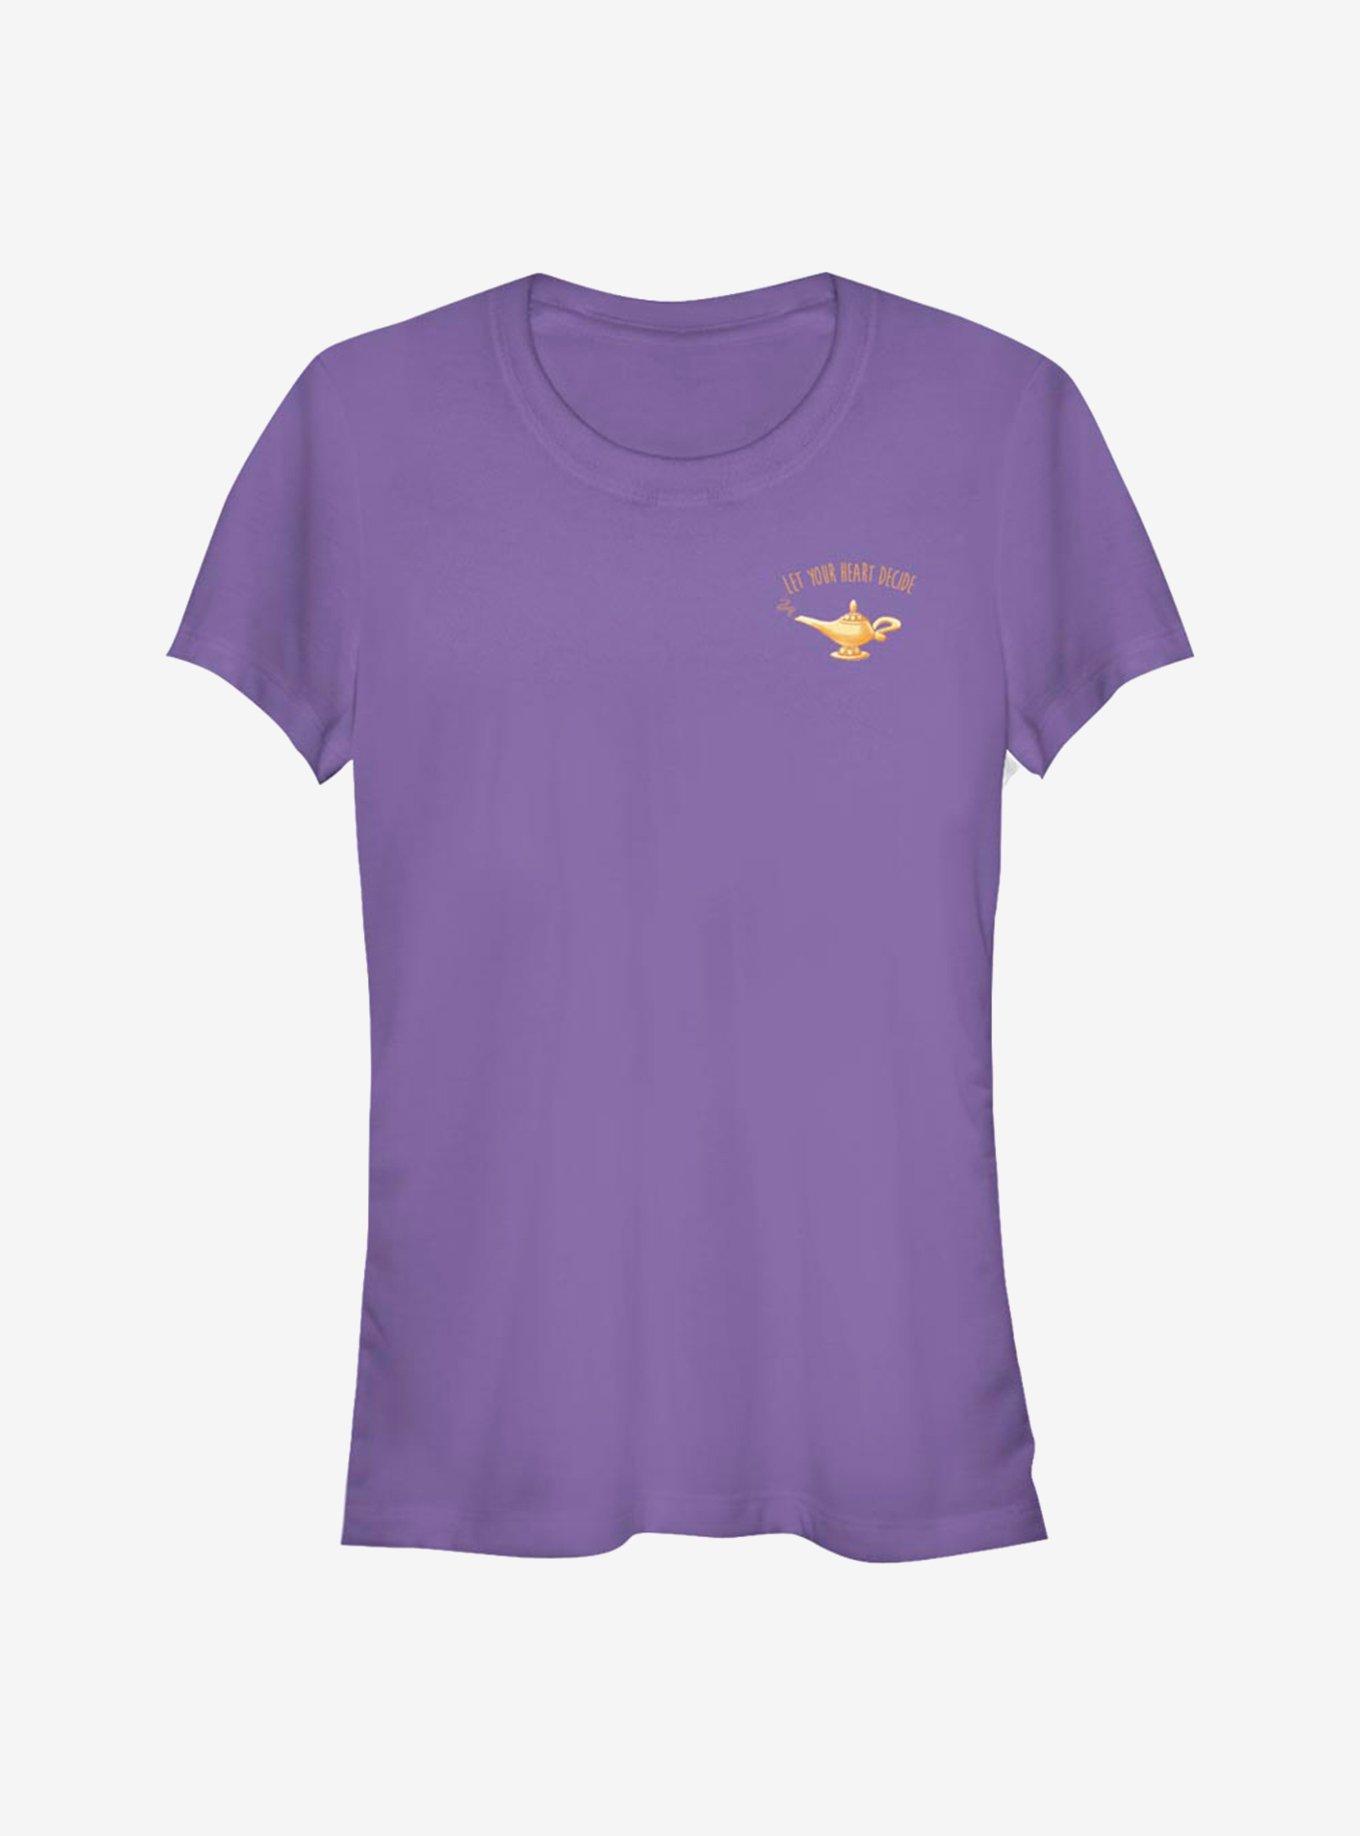 Disney Aladdin Magic Lamp Girls T-Shirt